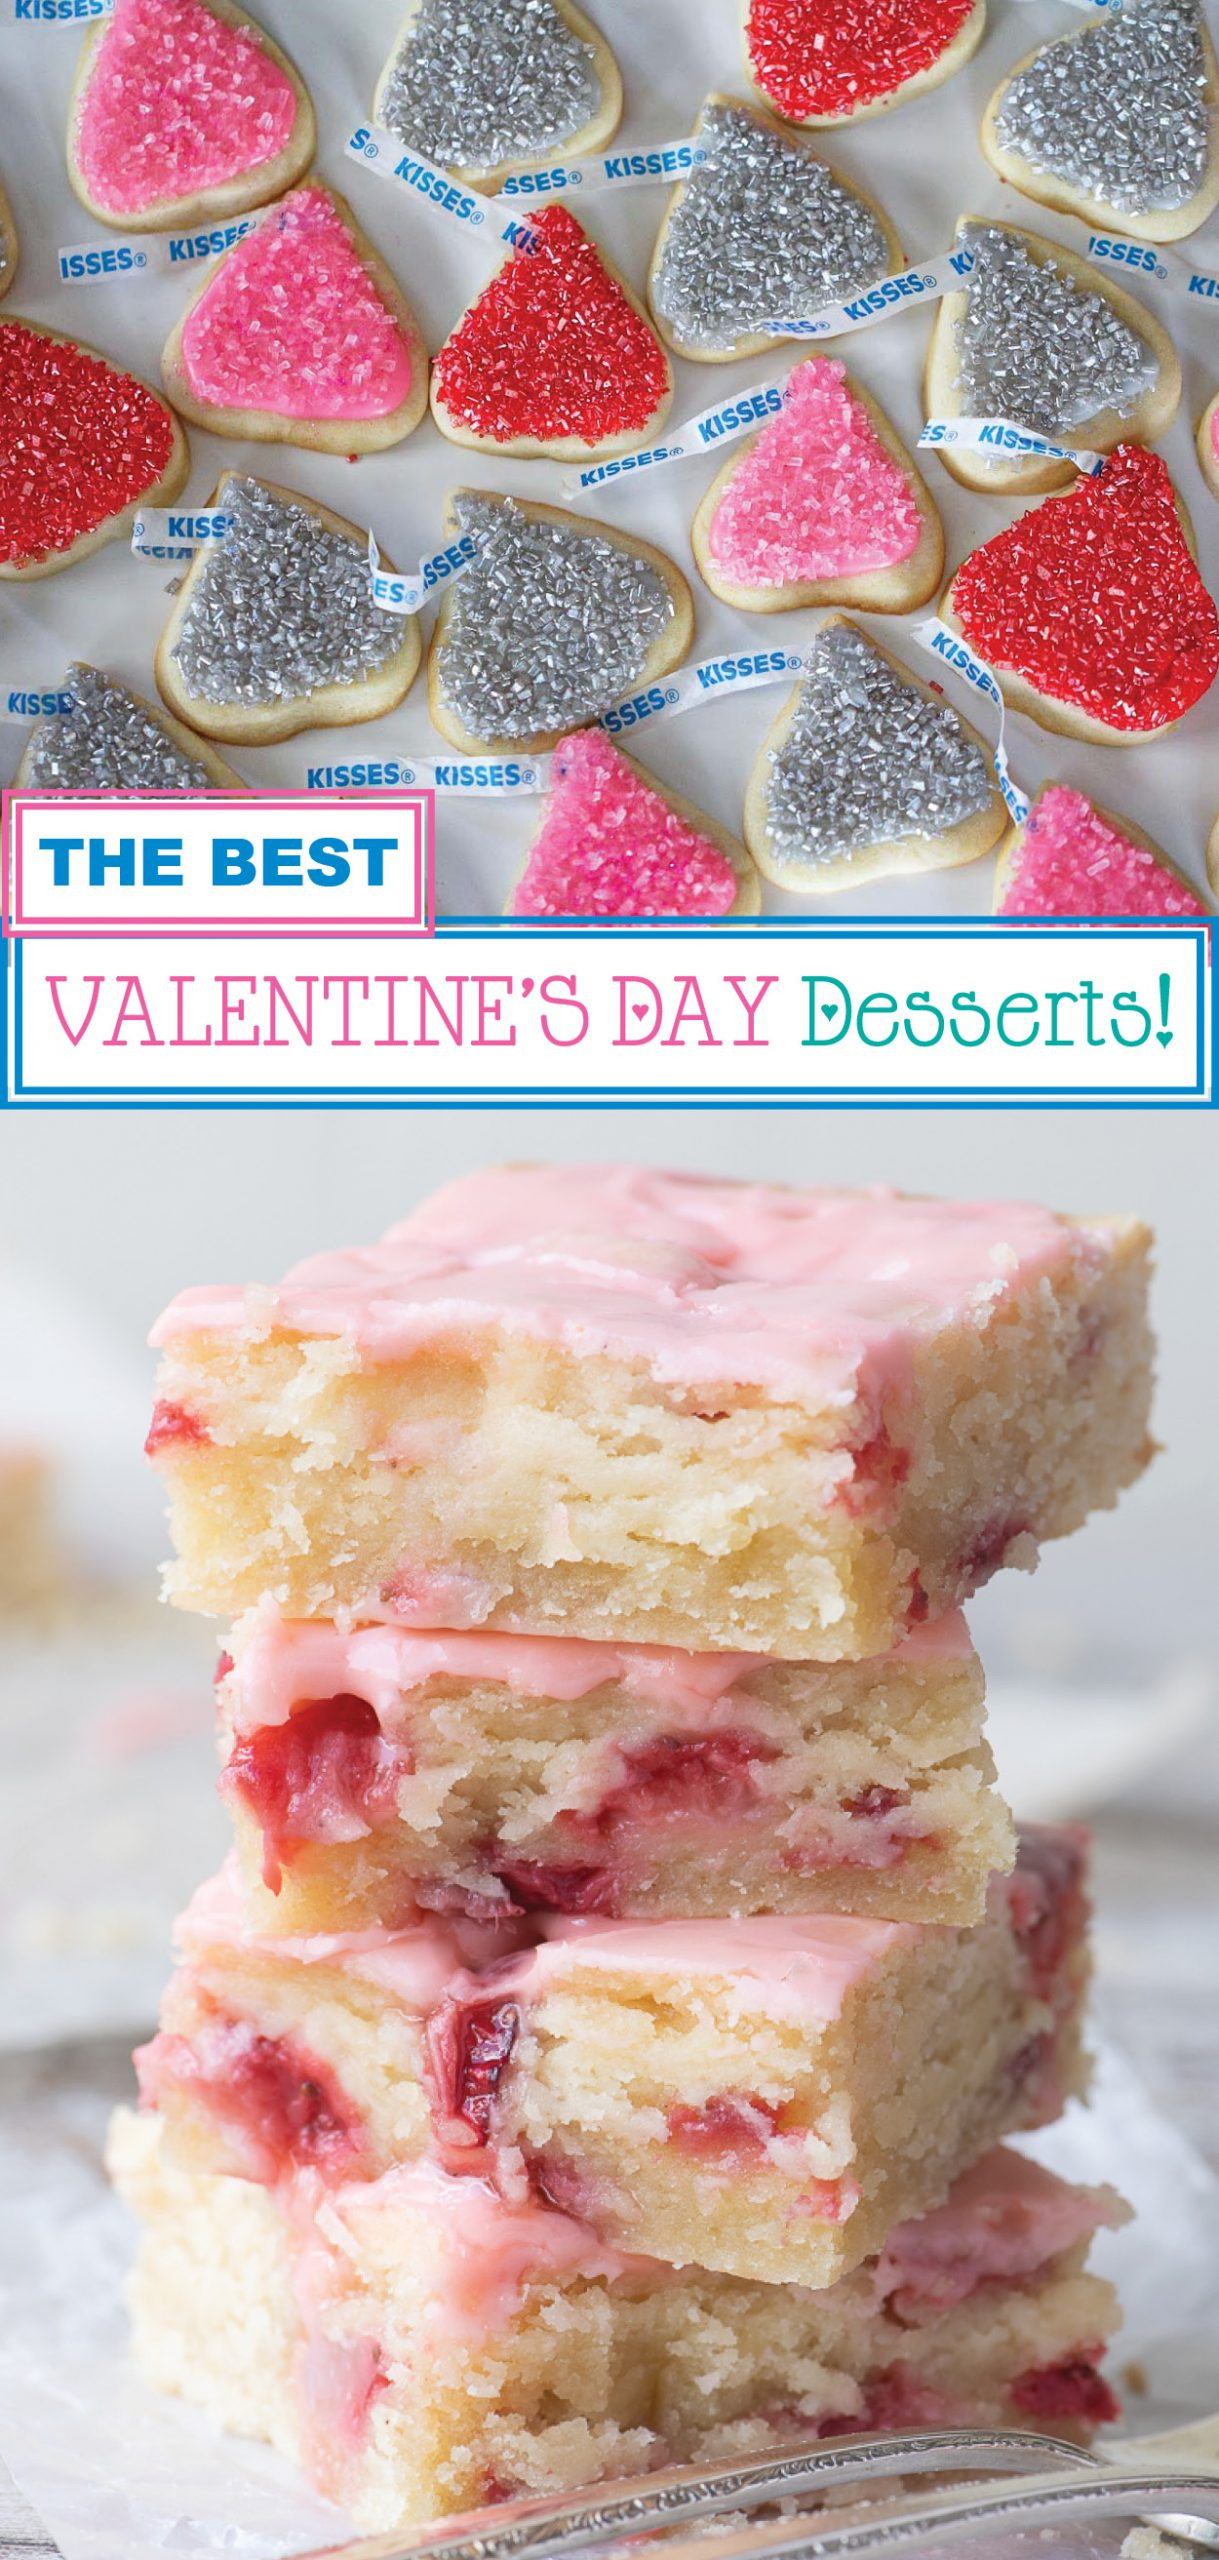 Best Valentines Desserts
 The BEST Valentine s Day Desserts A Little Something for